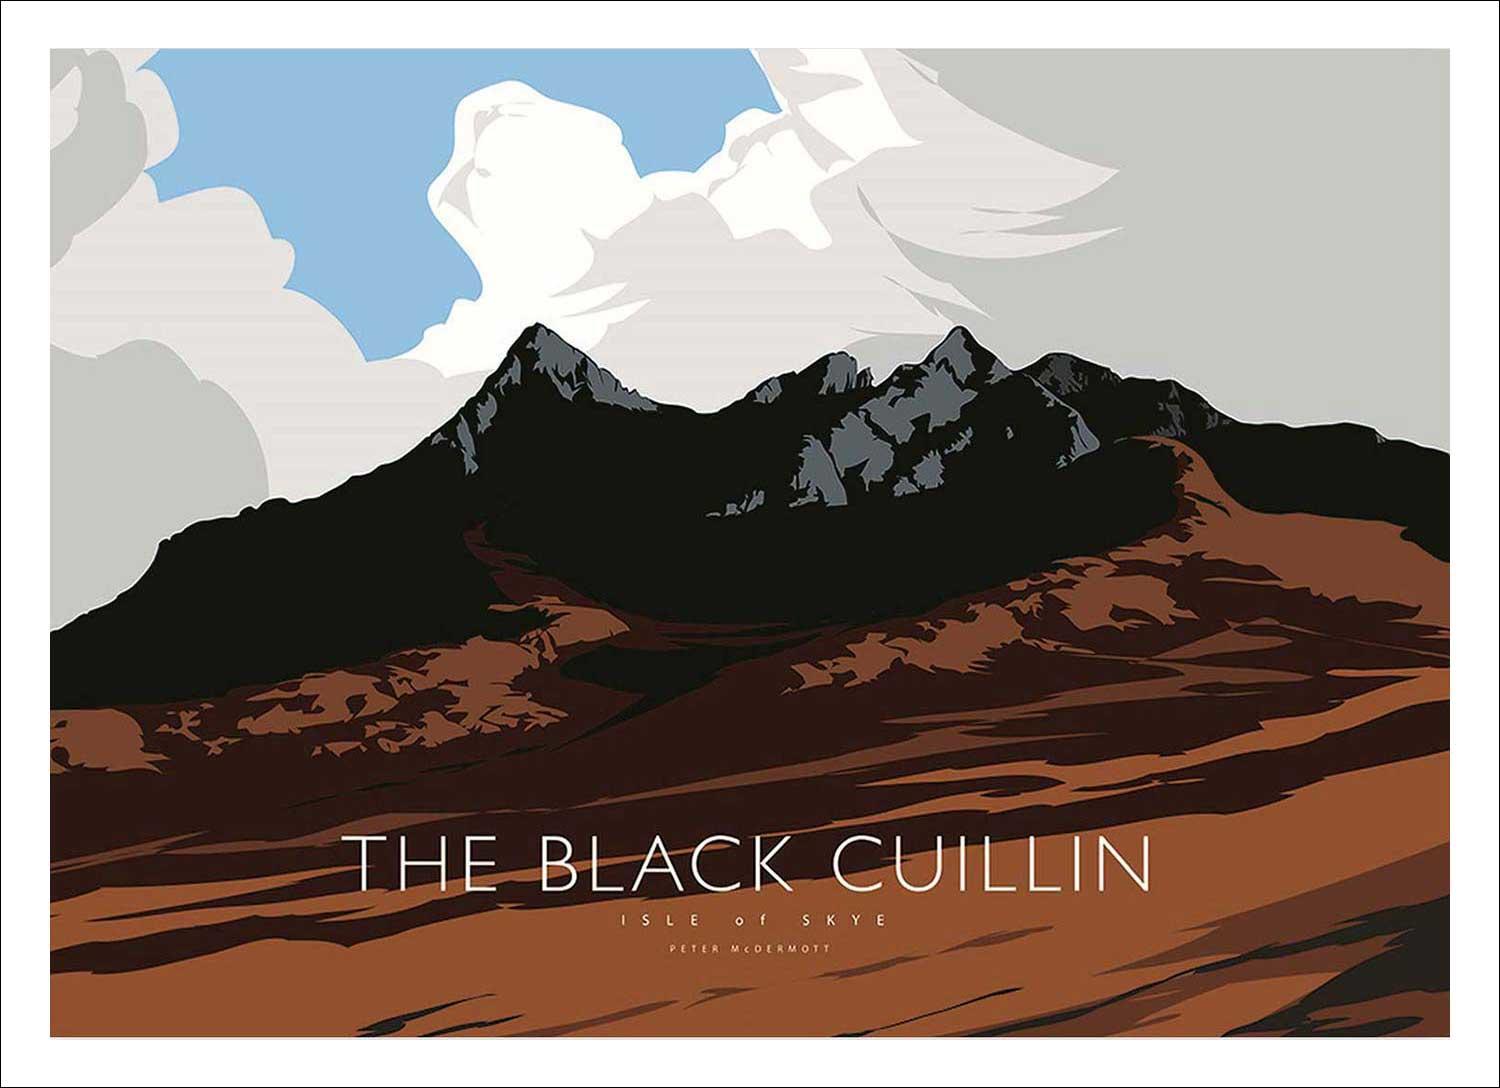 The Black Cuillin Art Print from an original illustration by artist Peter McDermott